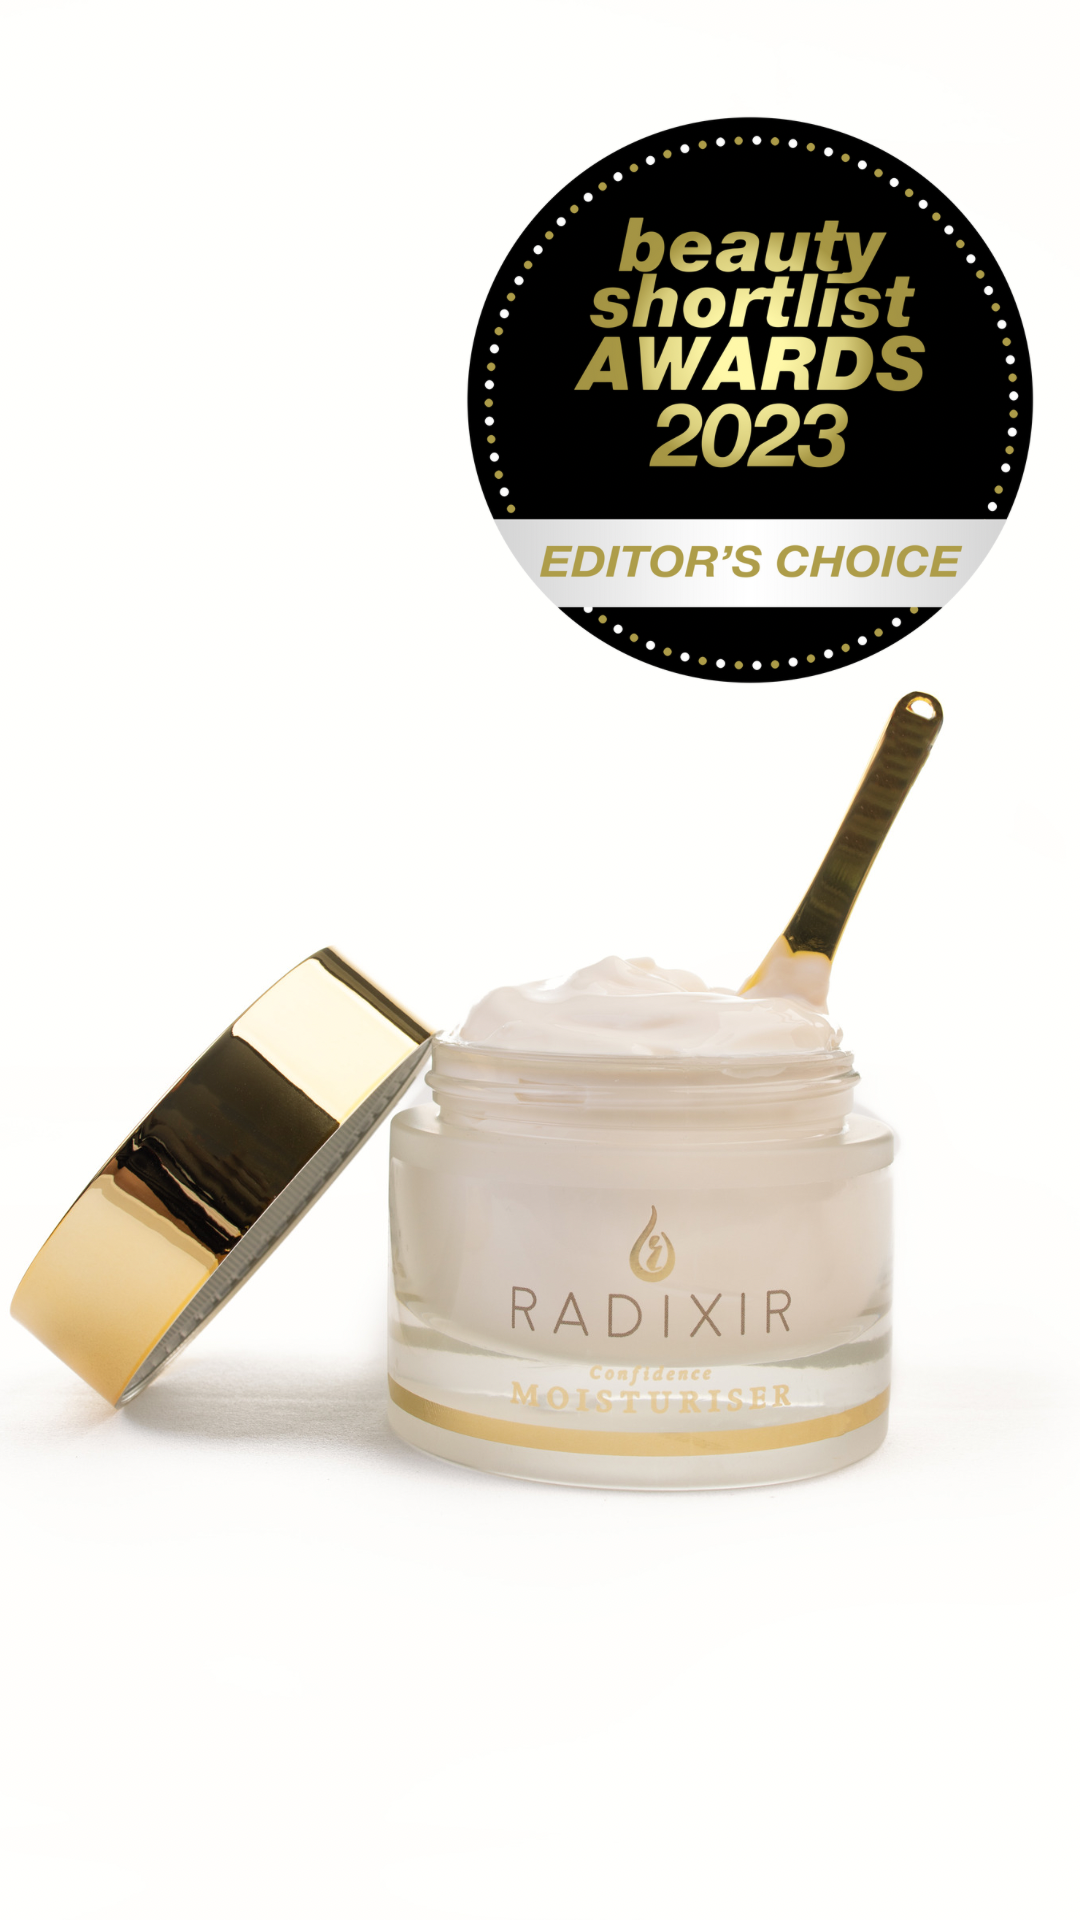 Radixir Confidence moisturiser with beauty short list award 